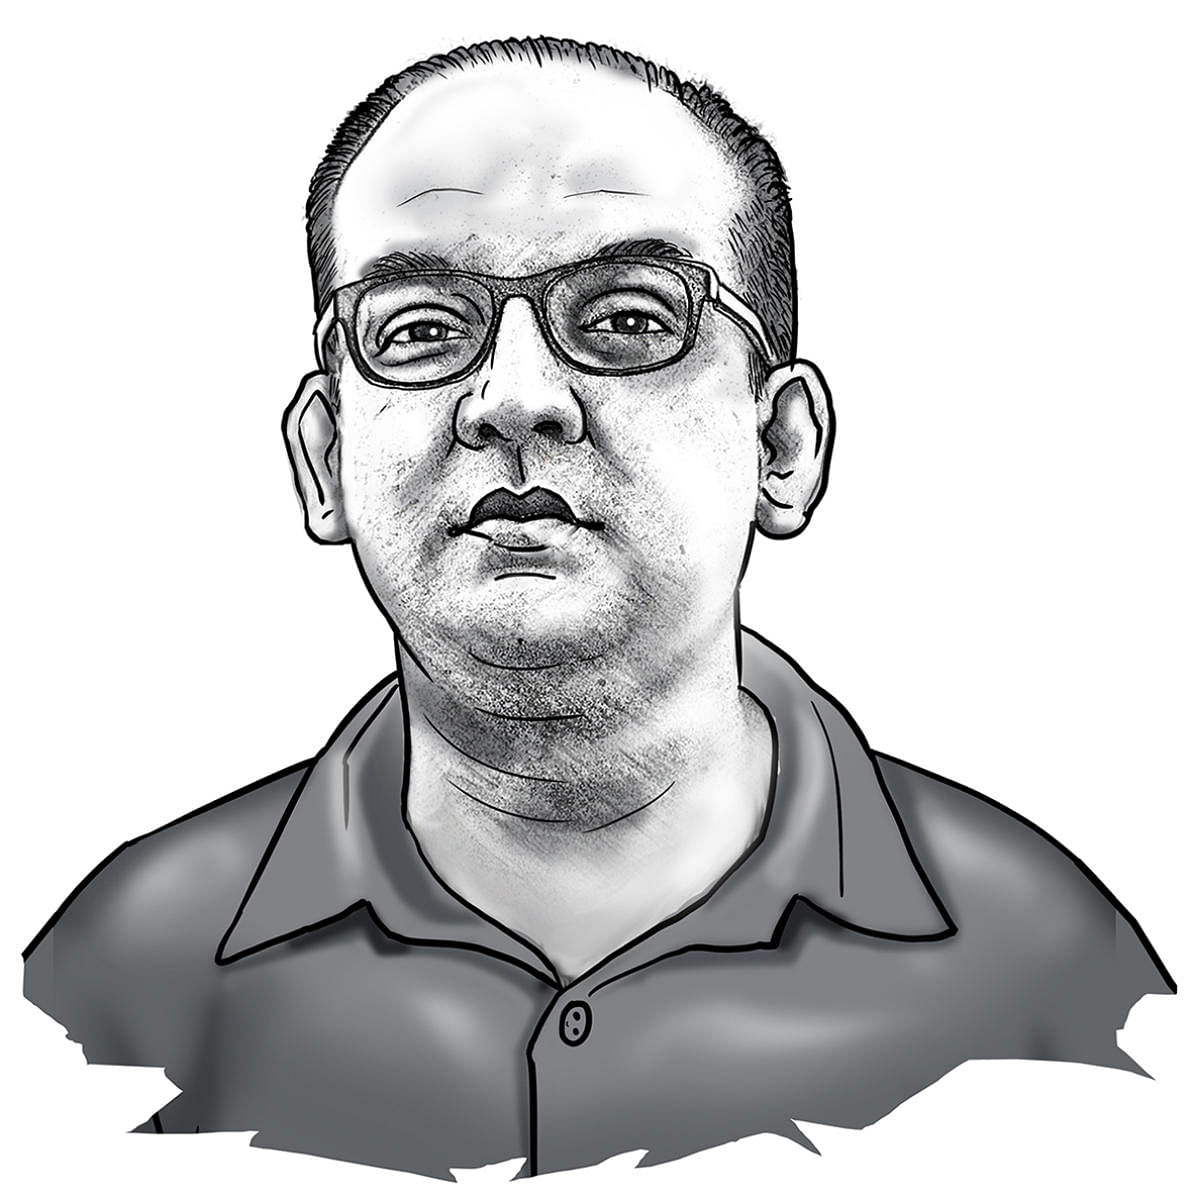 Vivek Kaul lives to read crime fiction, and unlike his honest ancestors, makes a living writing on economics @kaul_vivek